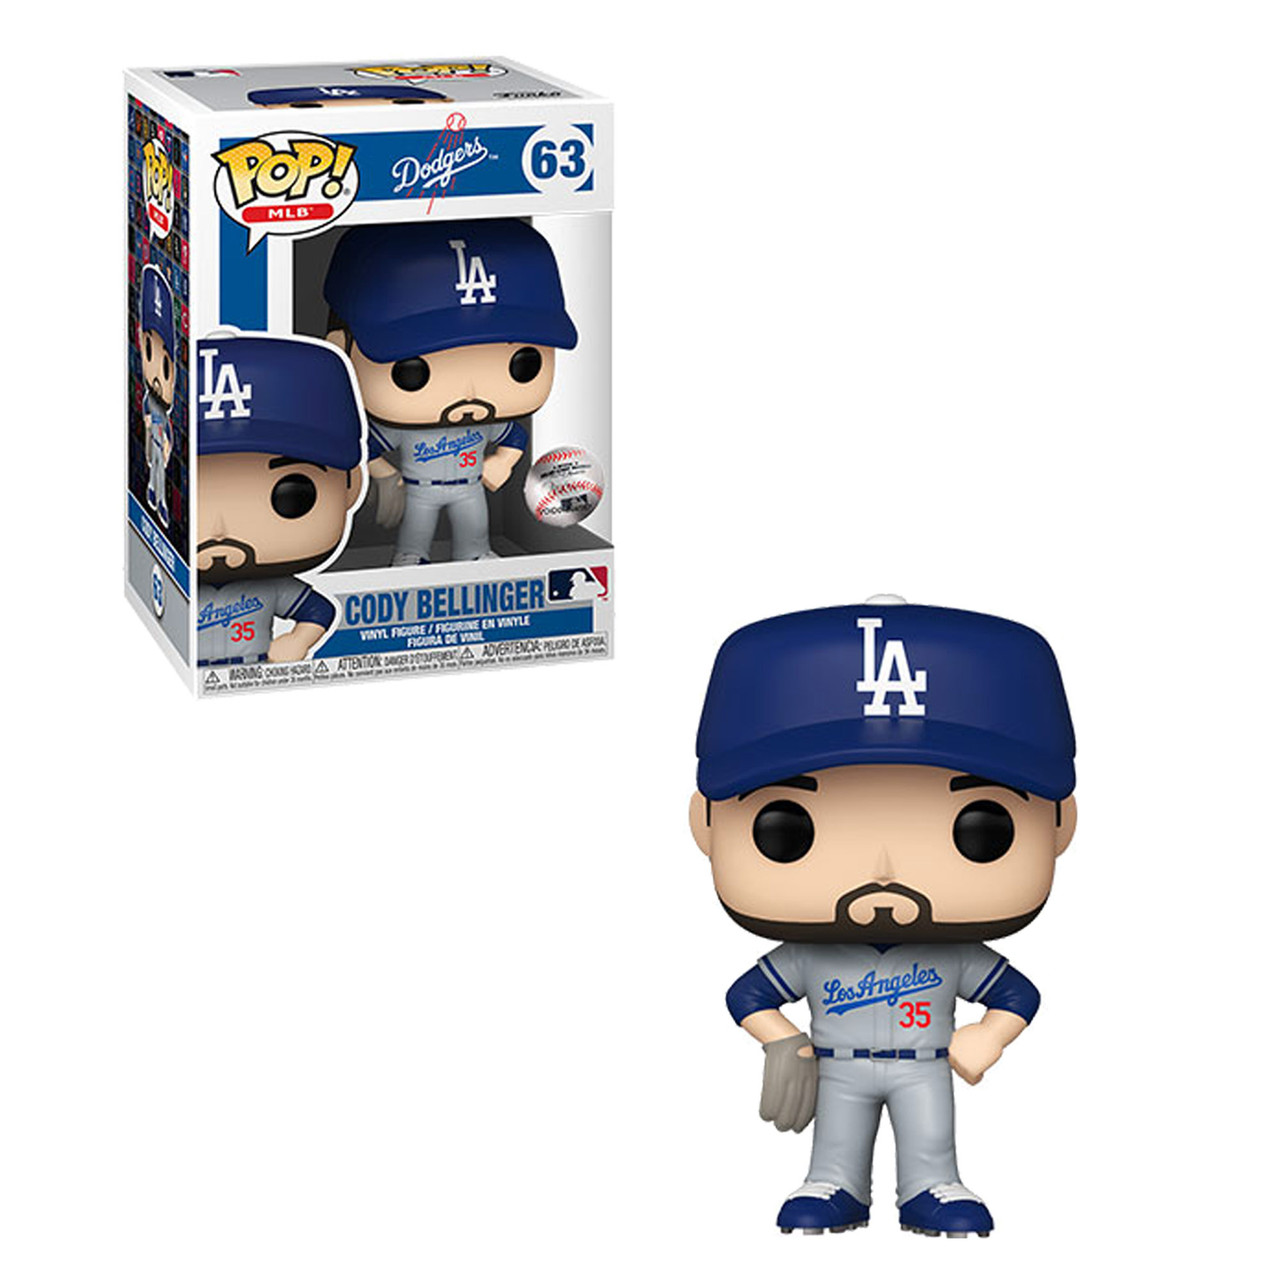 Cody Bellinger (Los Angeles Dodgers) Gray Uniform MLB Funko Pop